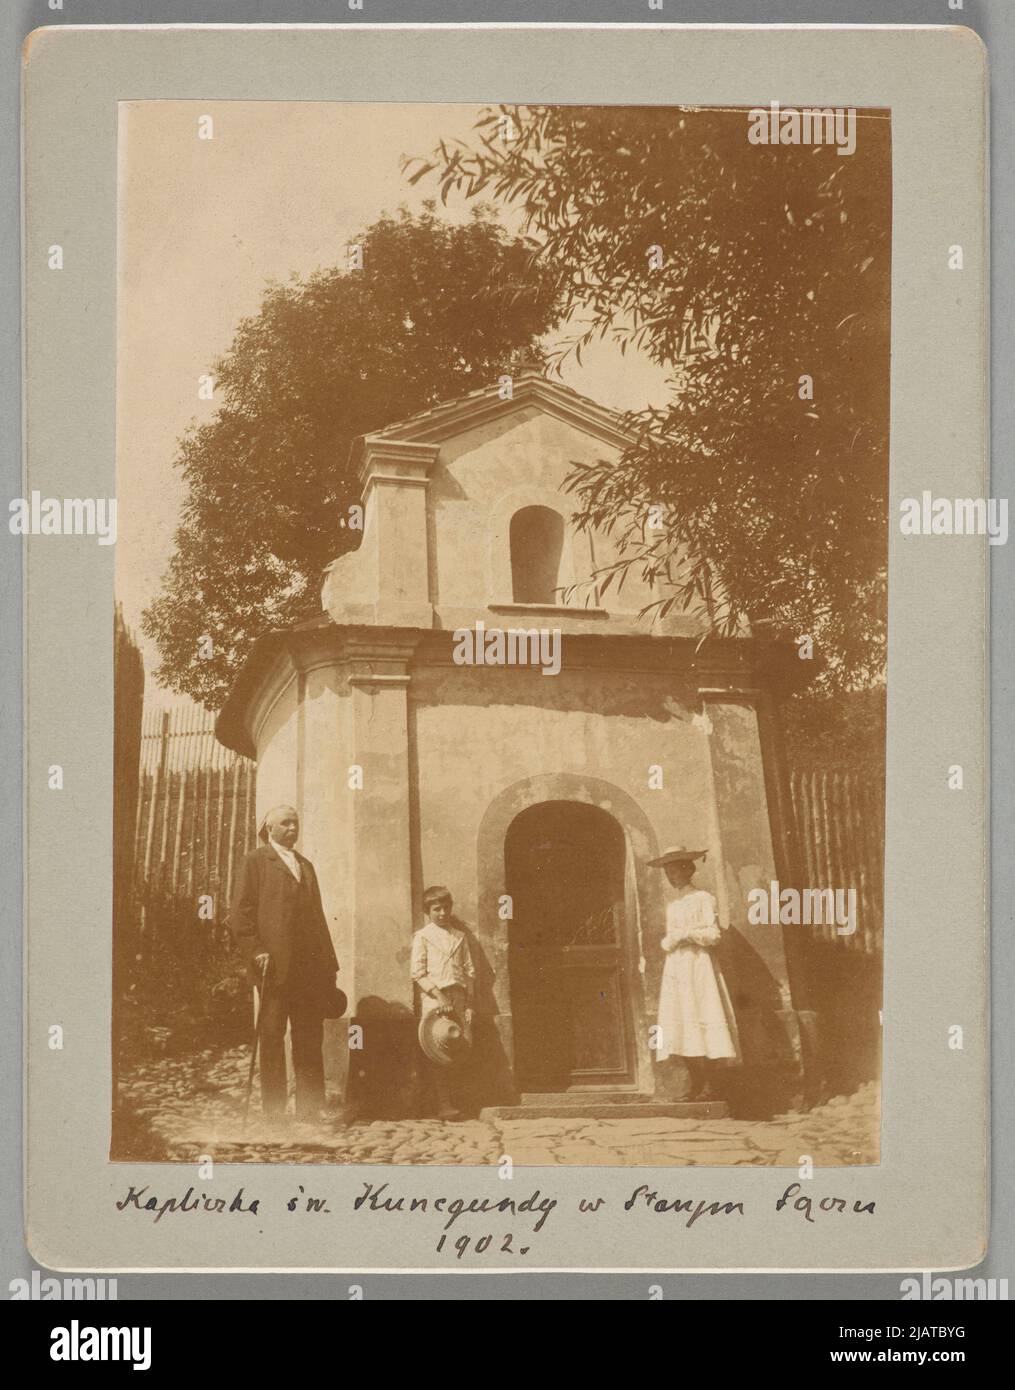 Bliżej Kultury concesso, Seweryn (1857 1937) Foto Stock